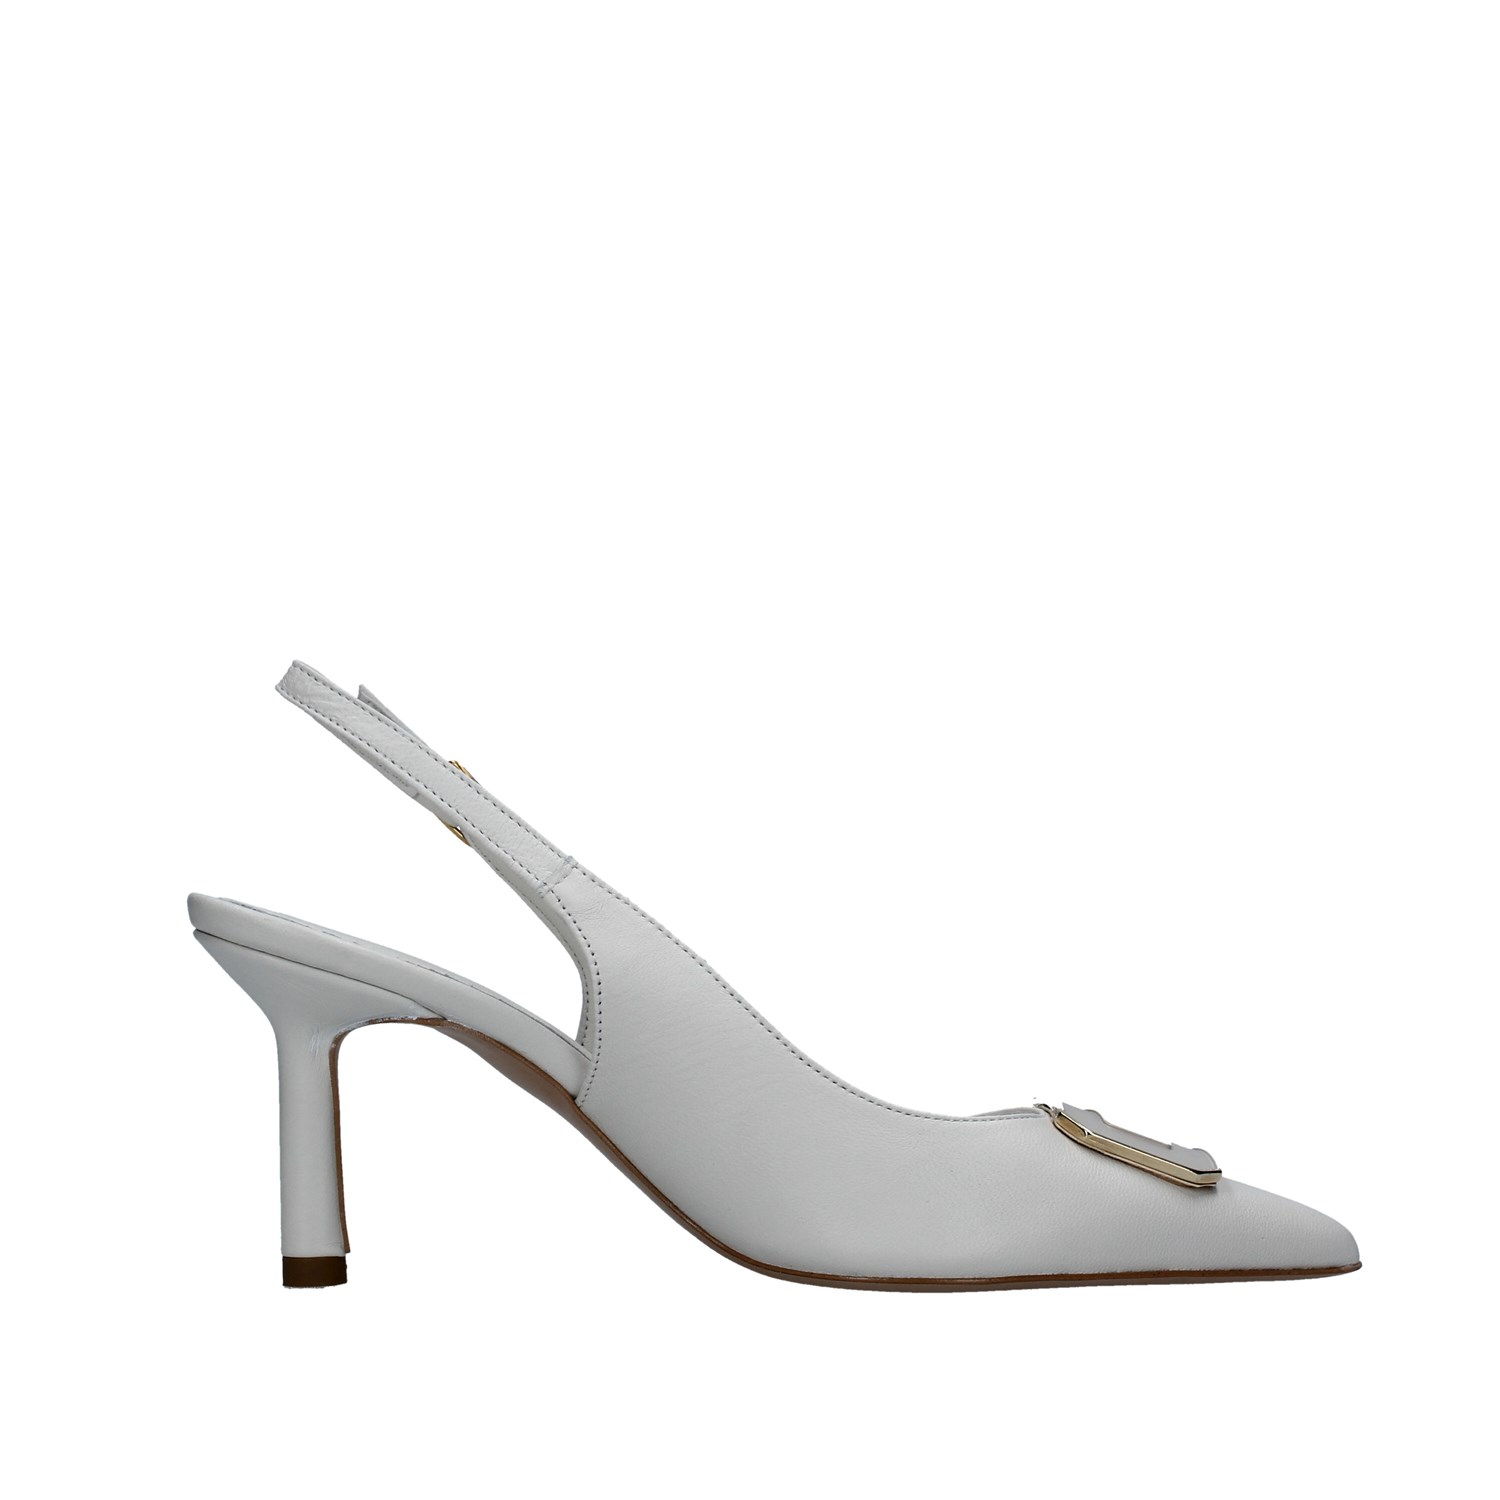 Paolo Mattei Shoes Woman Chanel WHITE GODIVA70 06